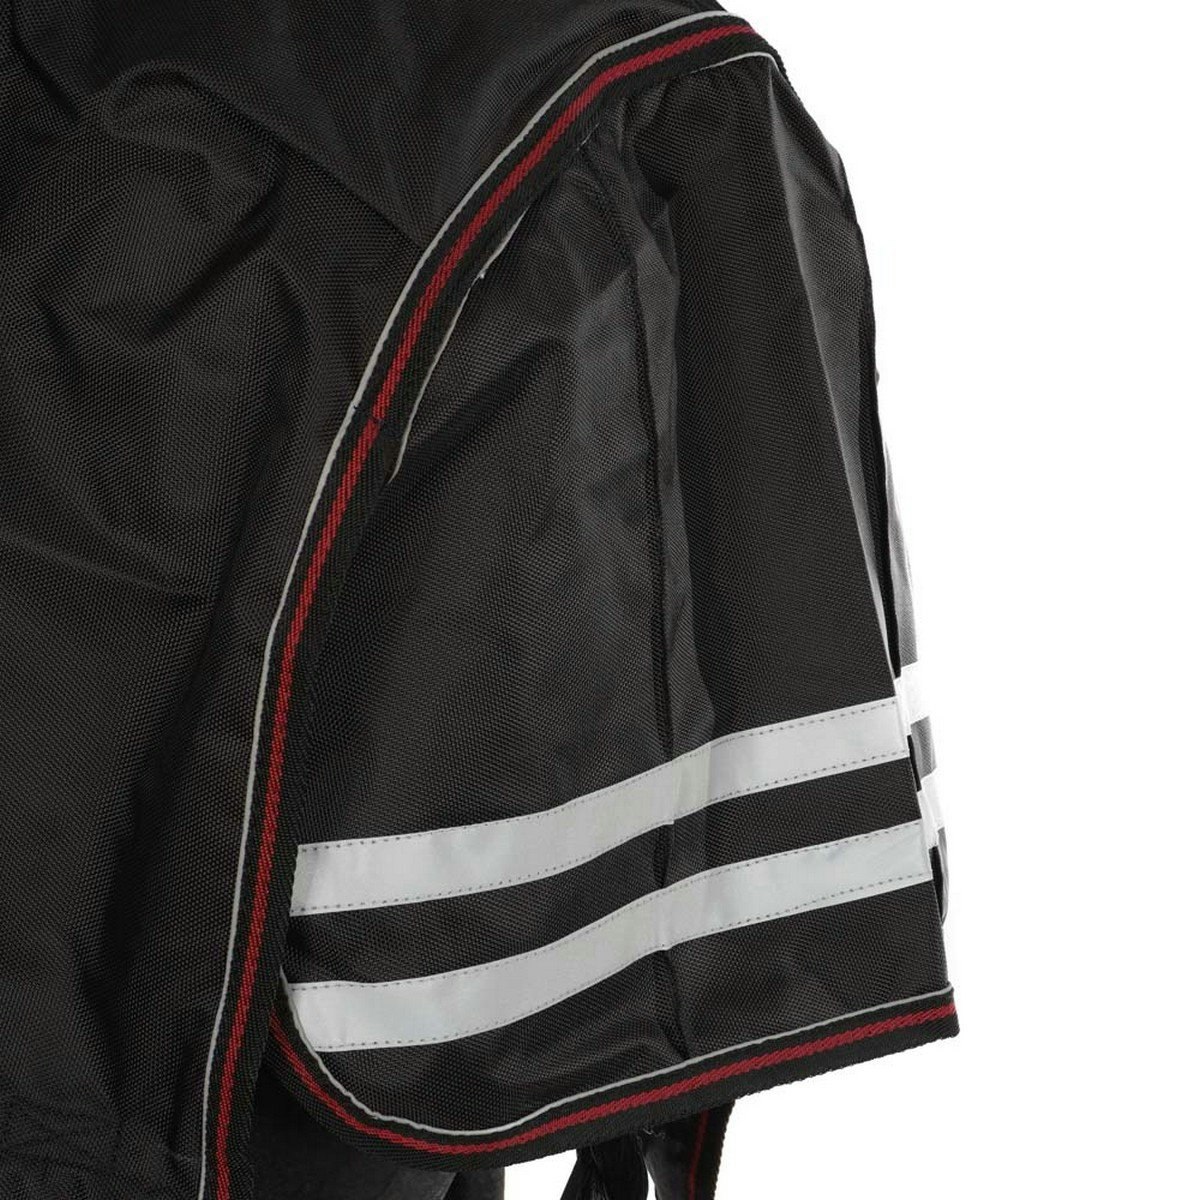 CATAGO Endurance Outdoor-täcke, svart